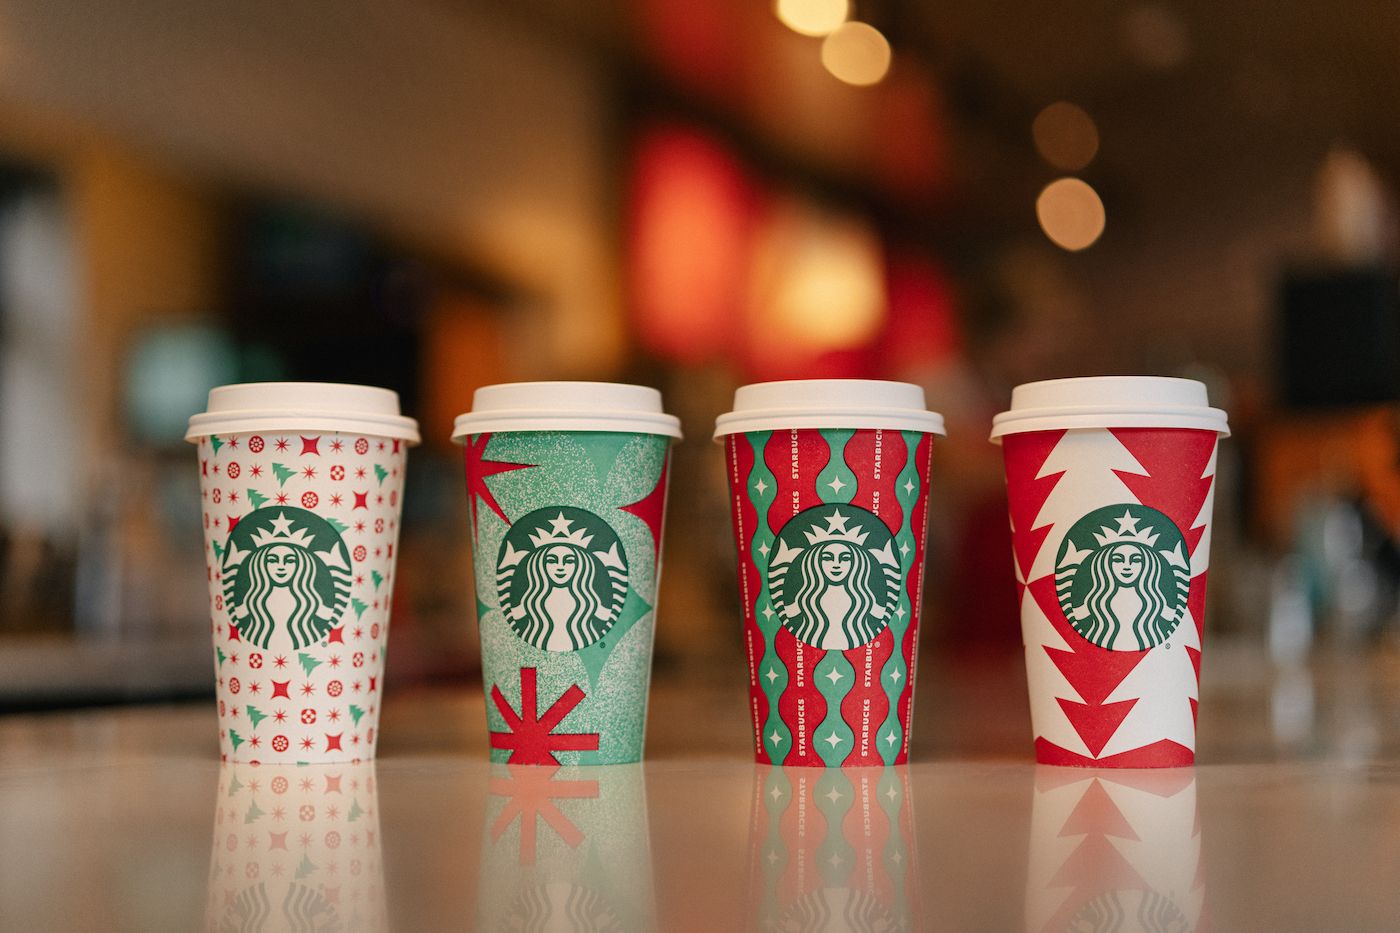 Starbucks' Holiday Menu 2022 - Here Is The 2022 Starbucks Holiday Menu